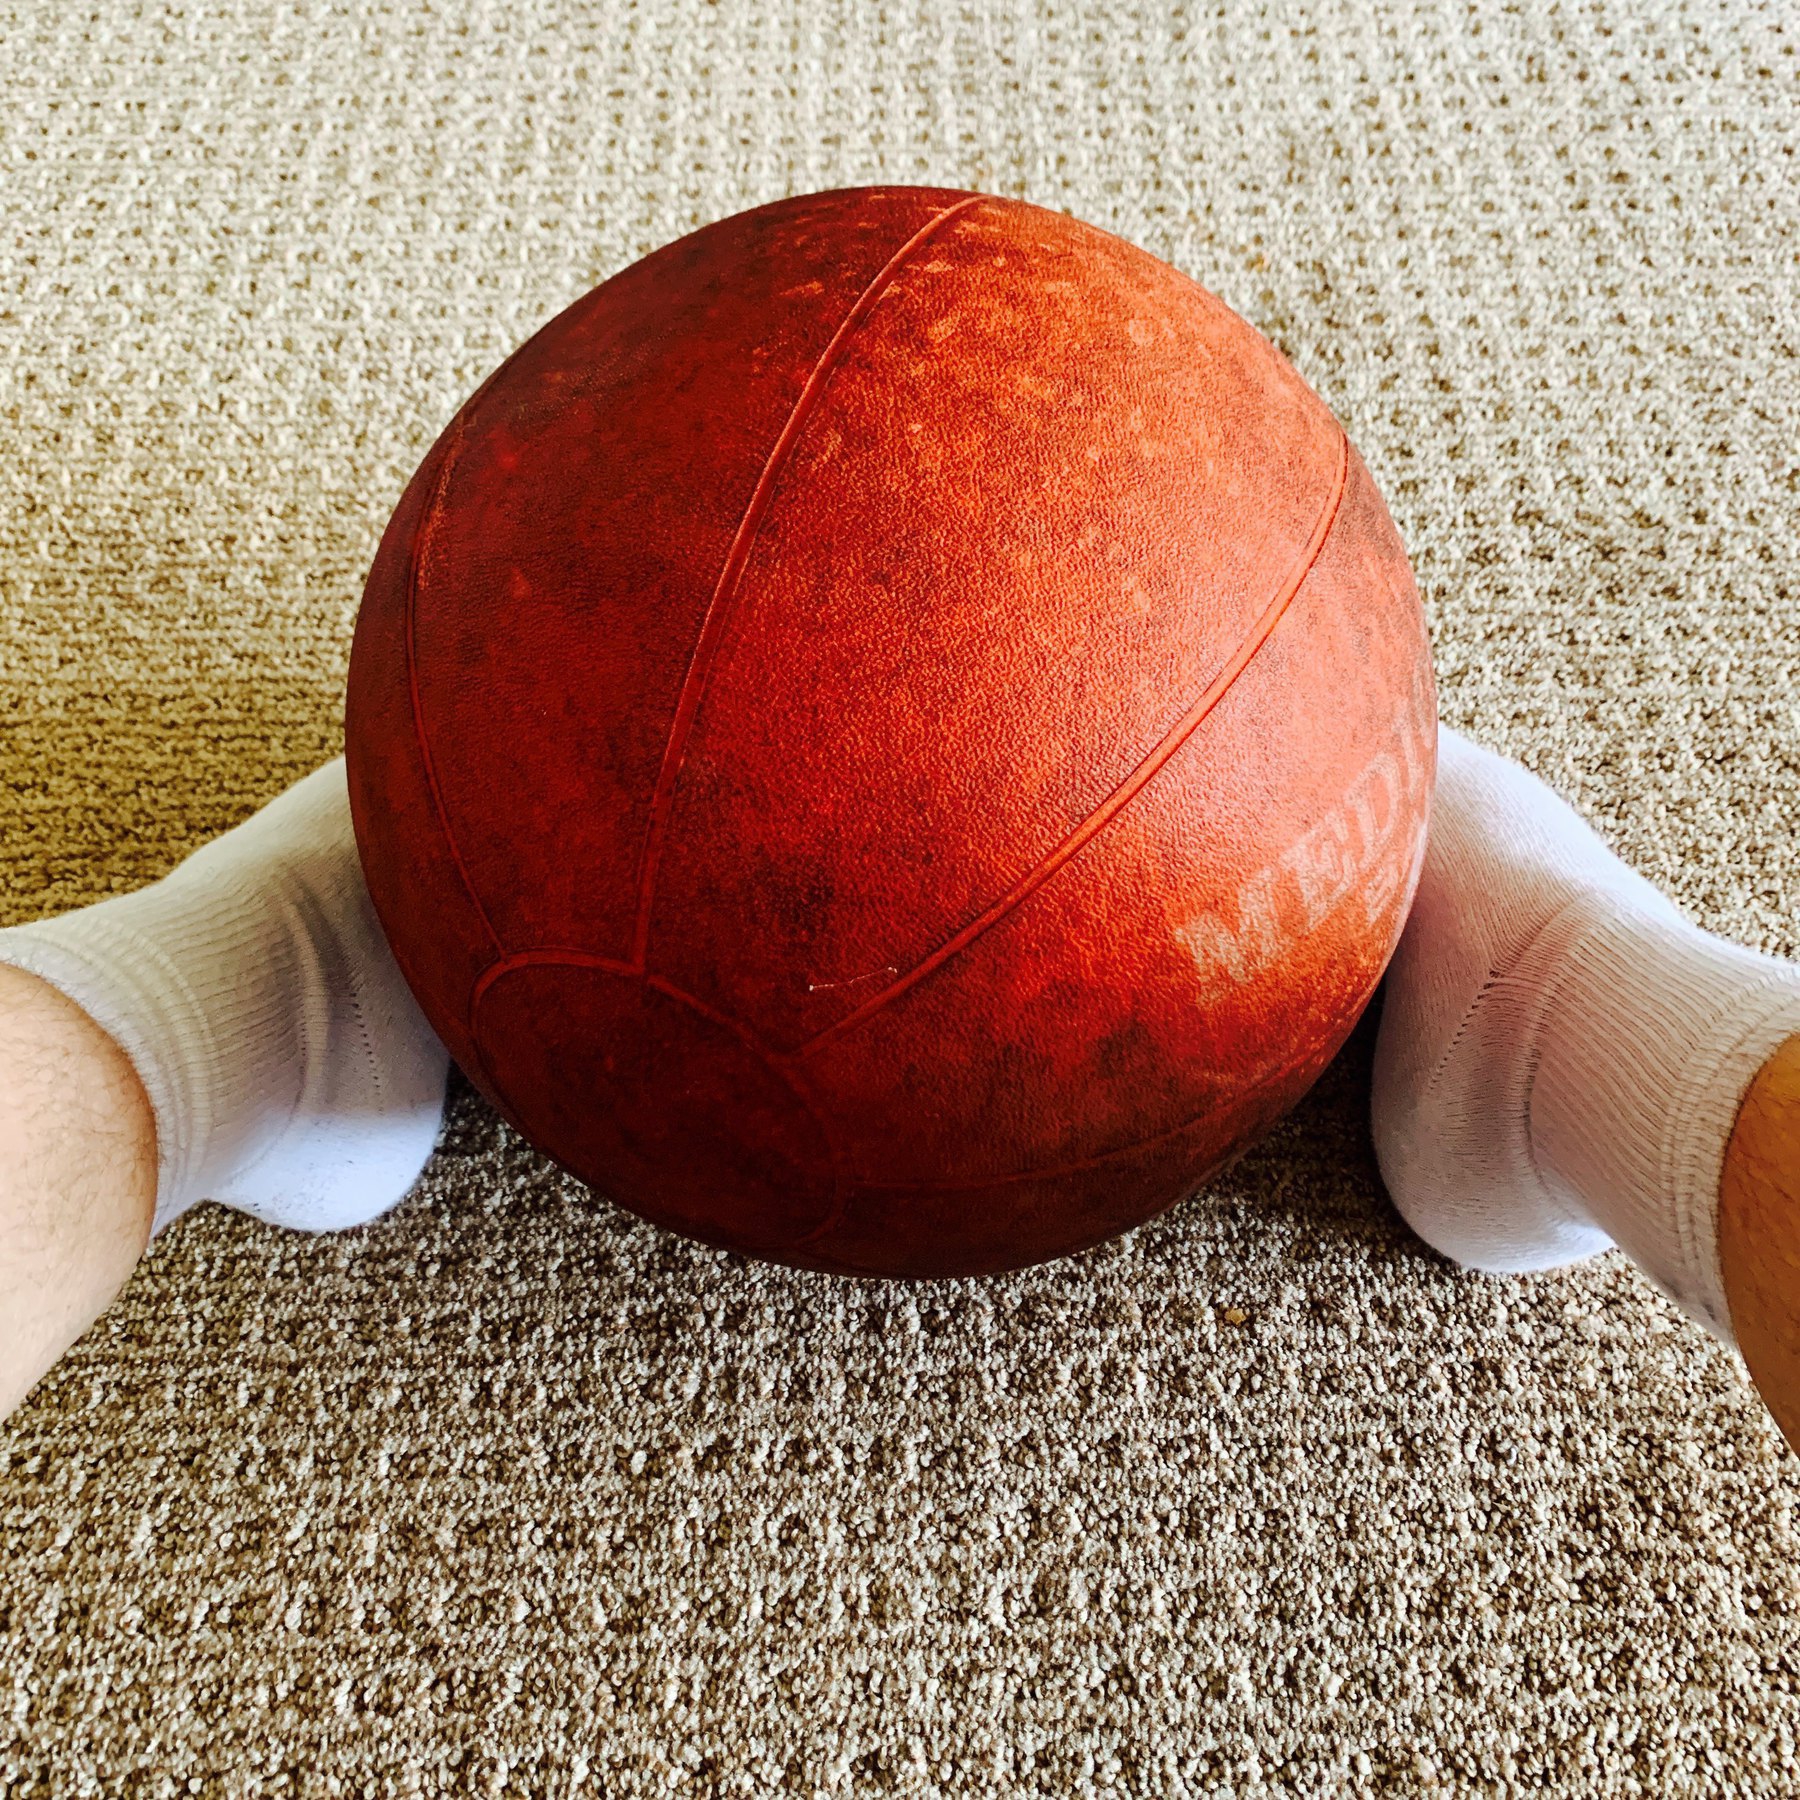 medicine ball resting between two feet